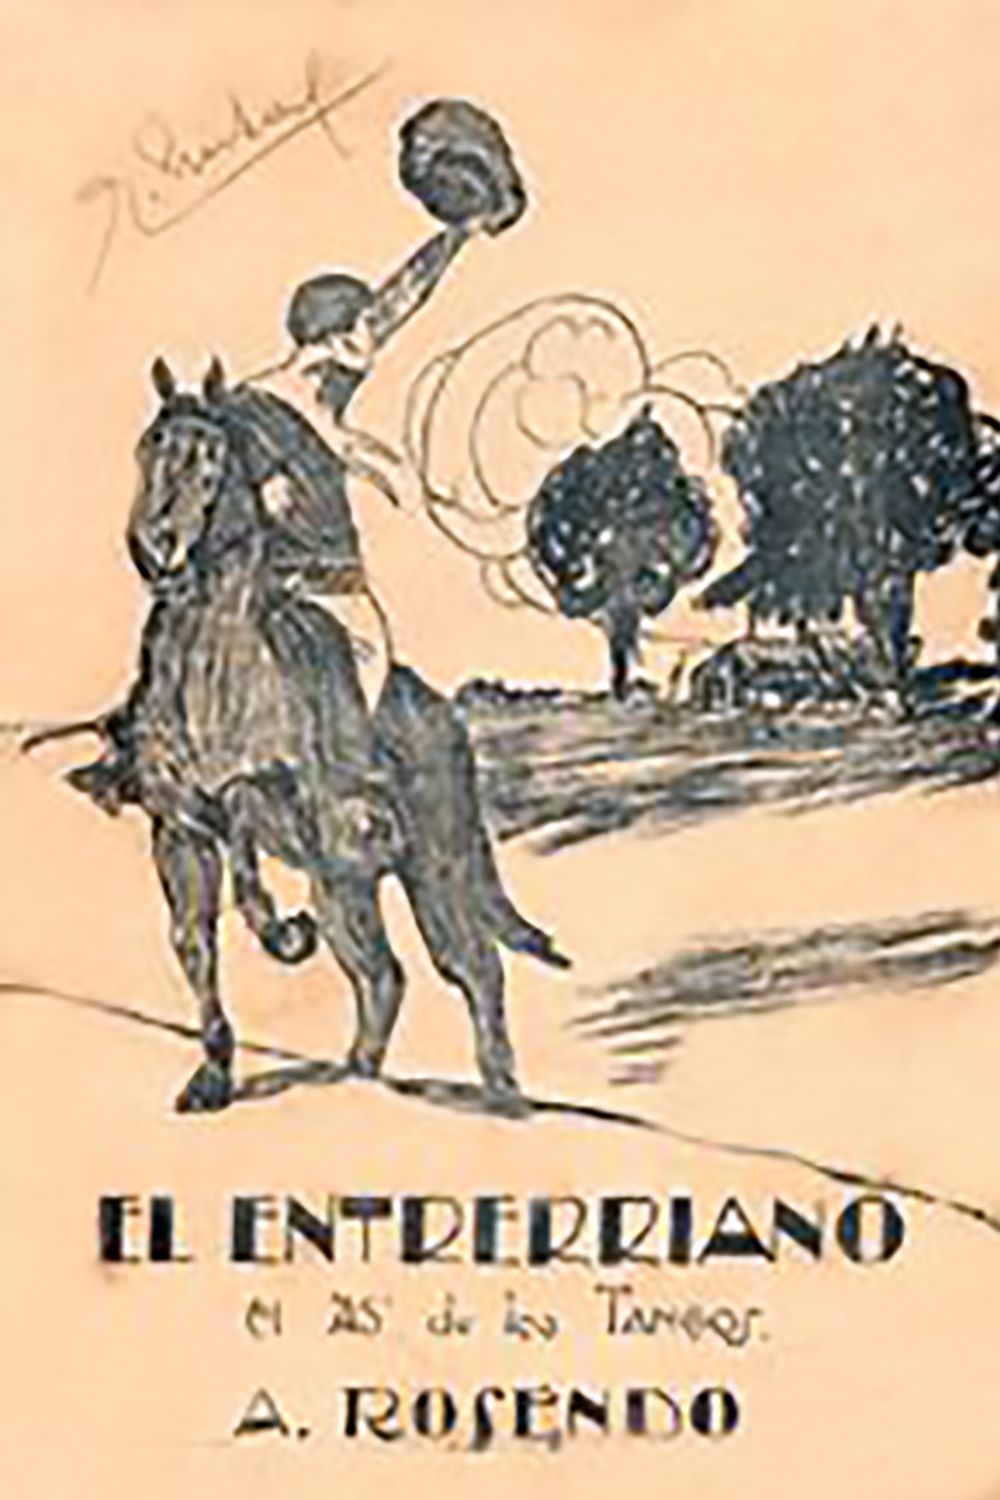 "El entrerriano", Argentine Tango music sheet cover.